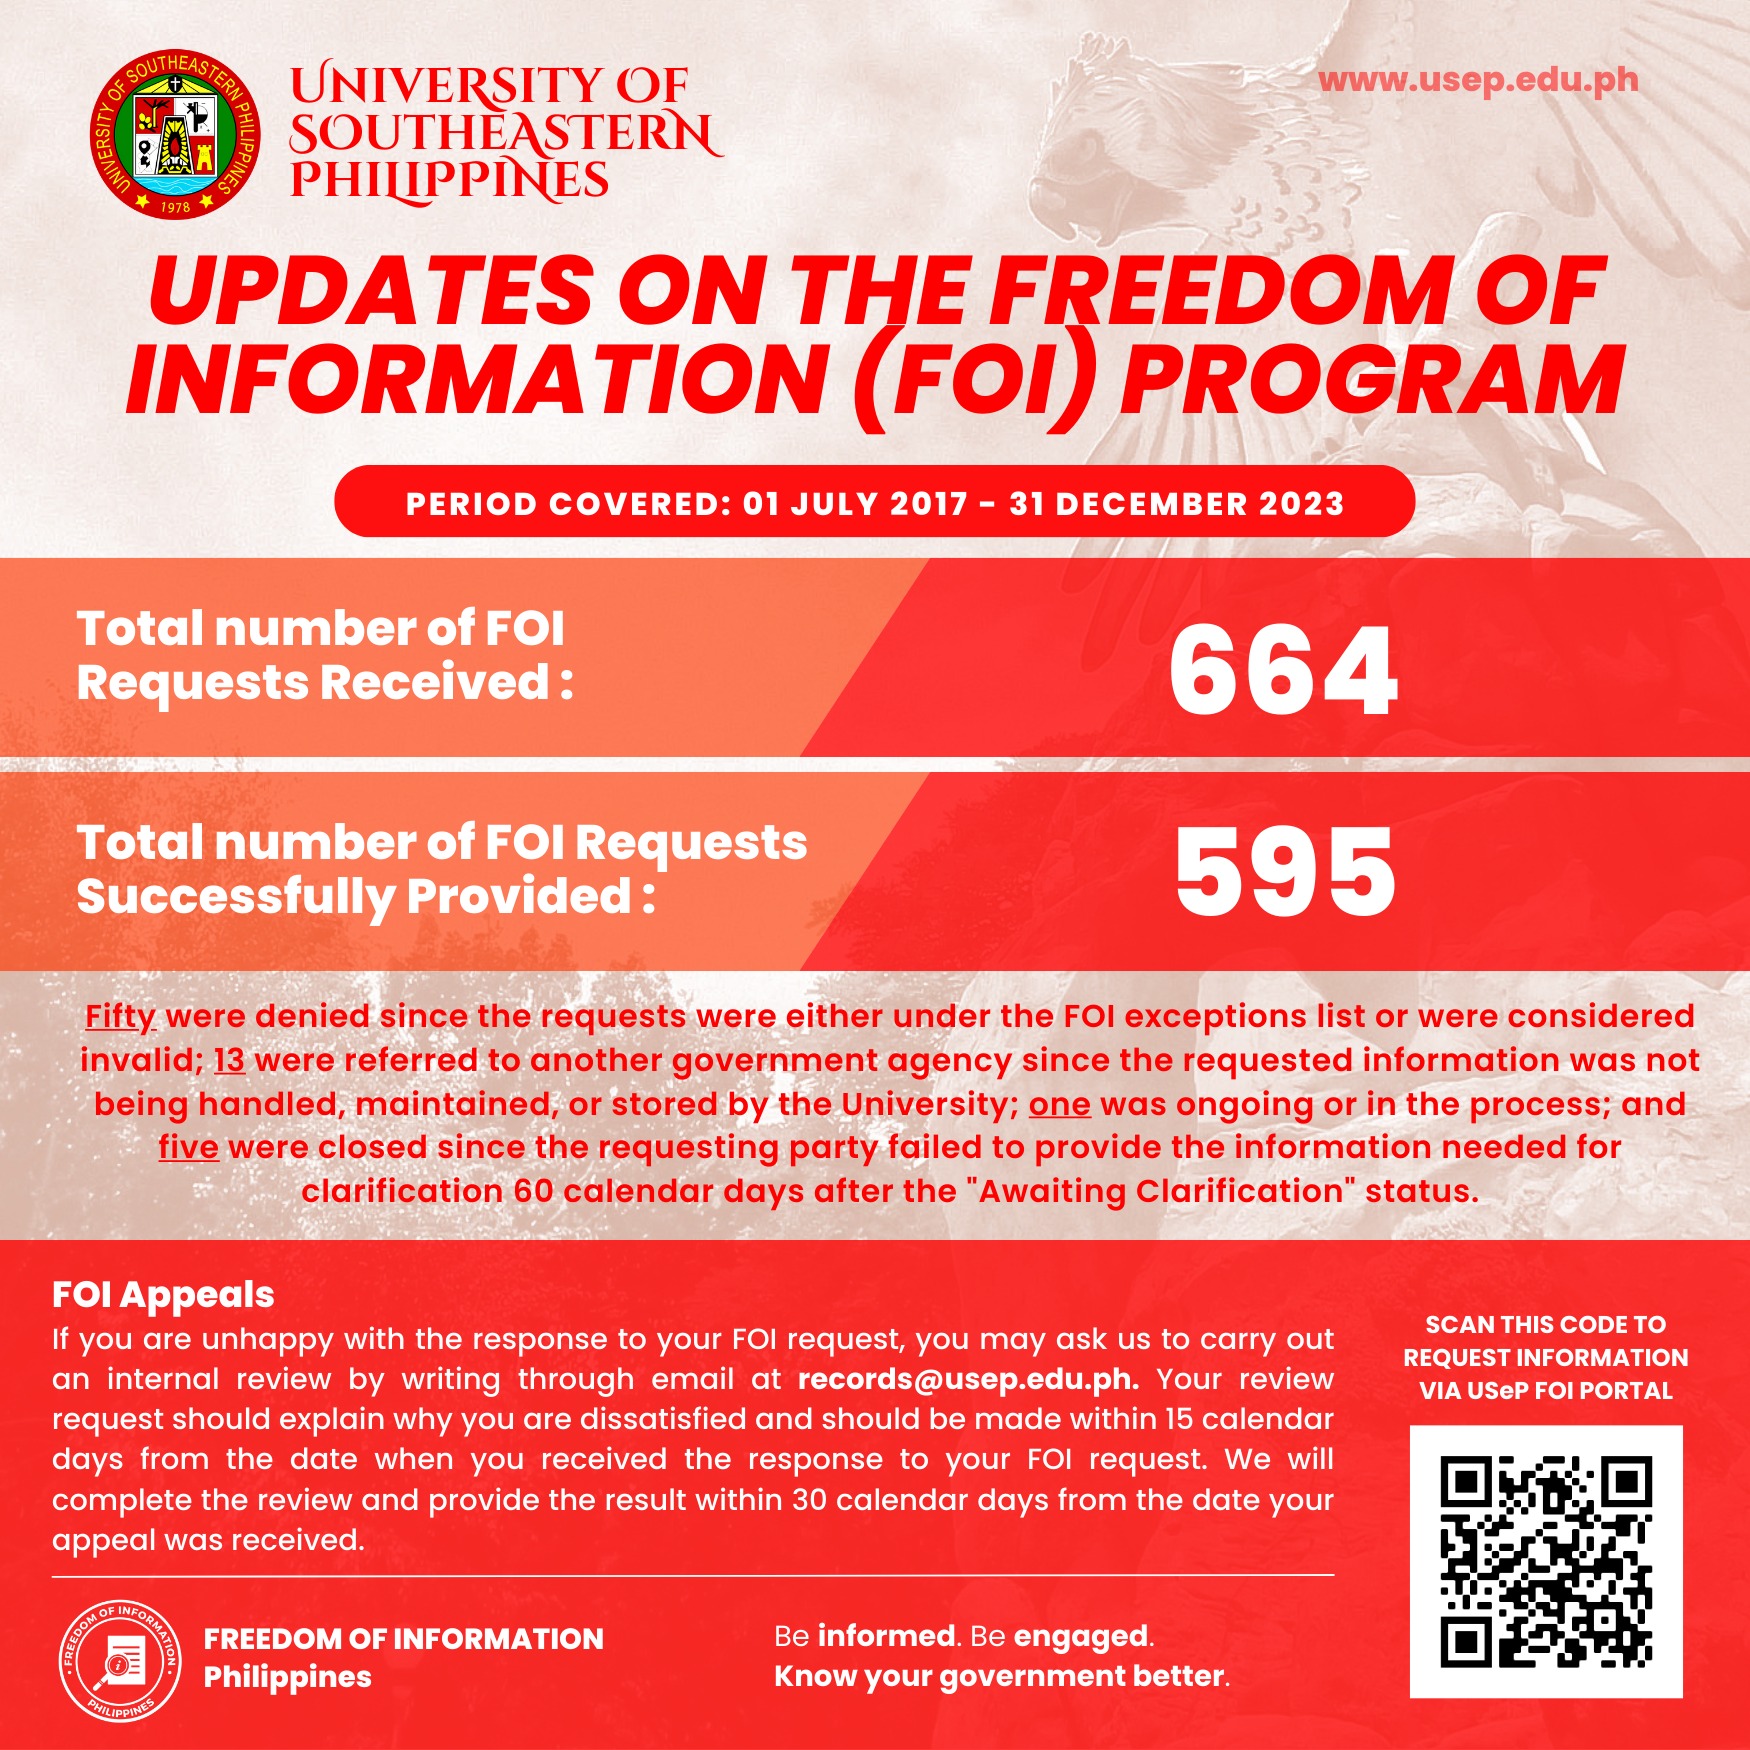 USeP FOI Program update as of December 2023